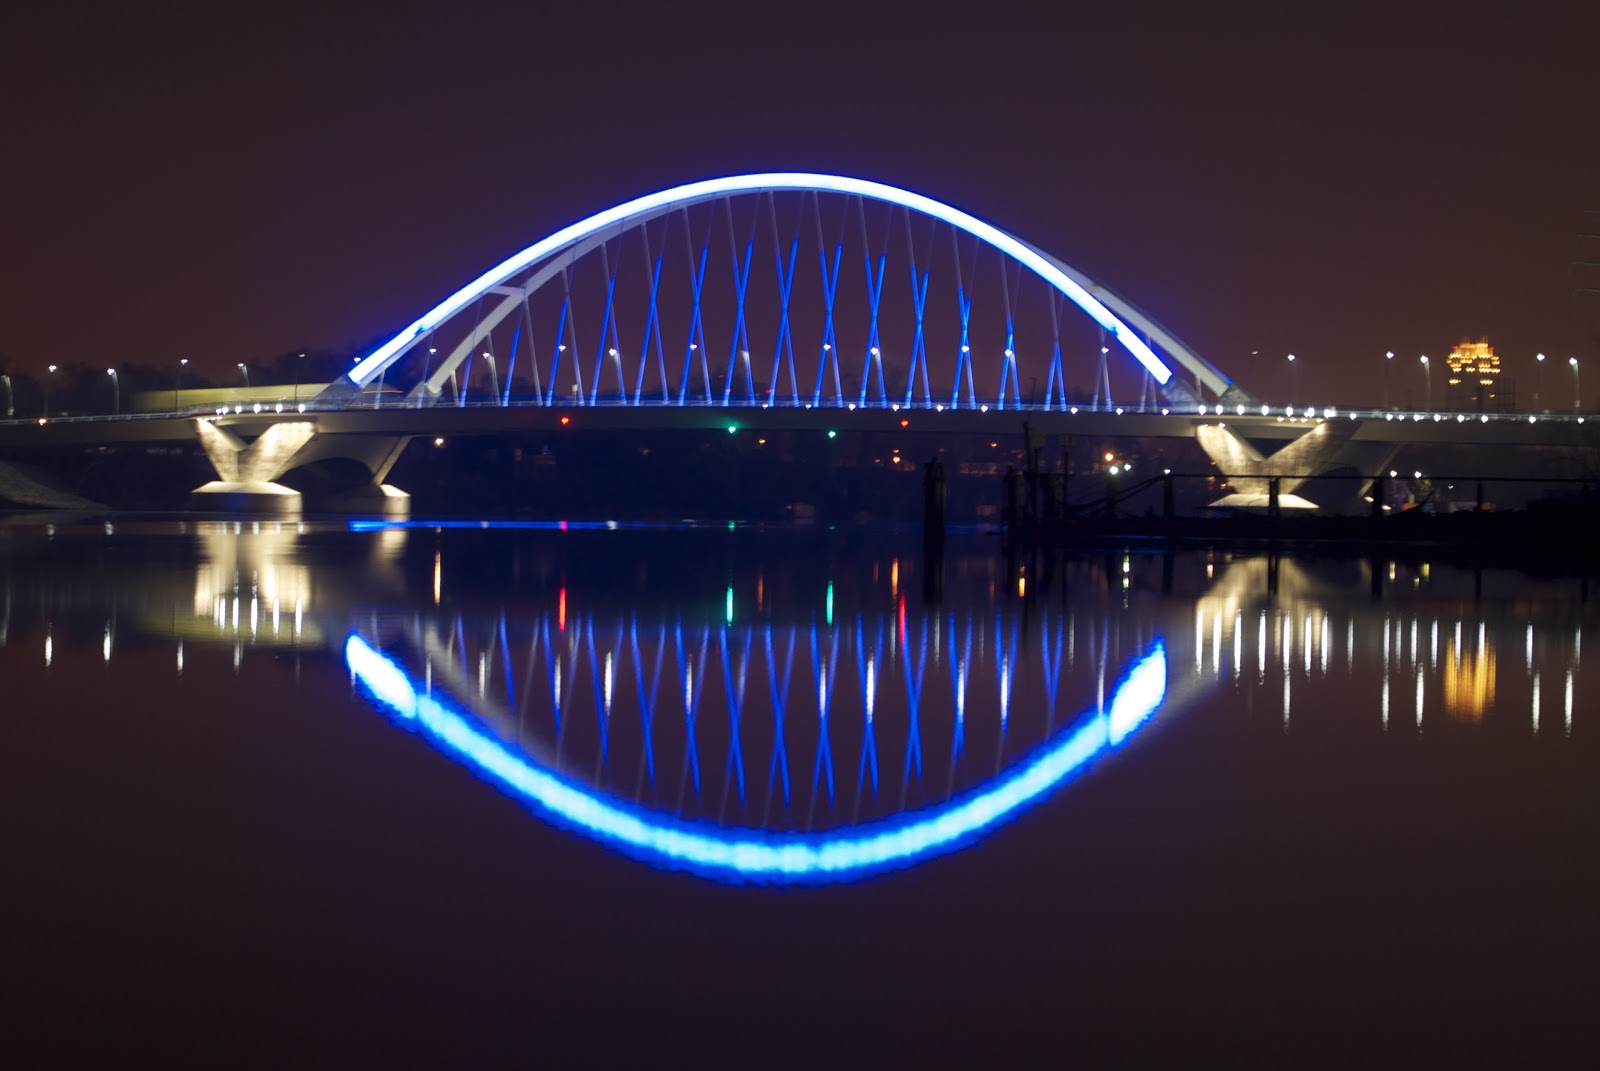 Amazing Lowry Avenue Bridge Pictures & Backgrounds